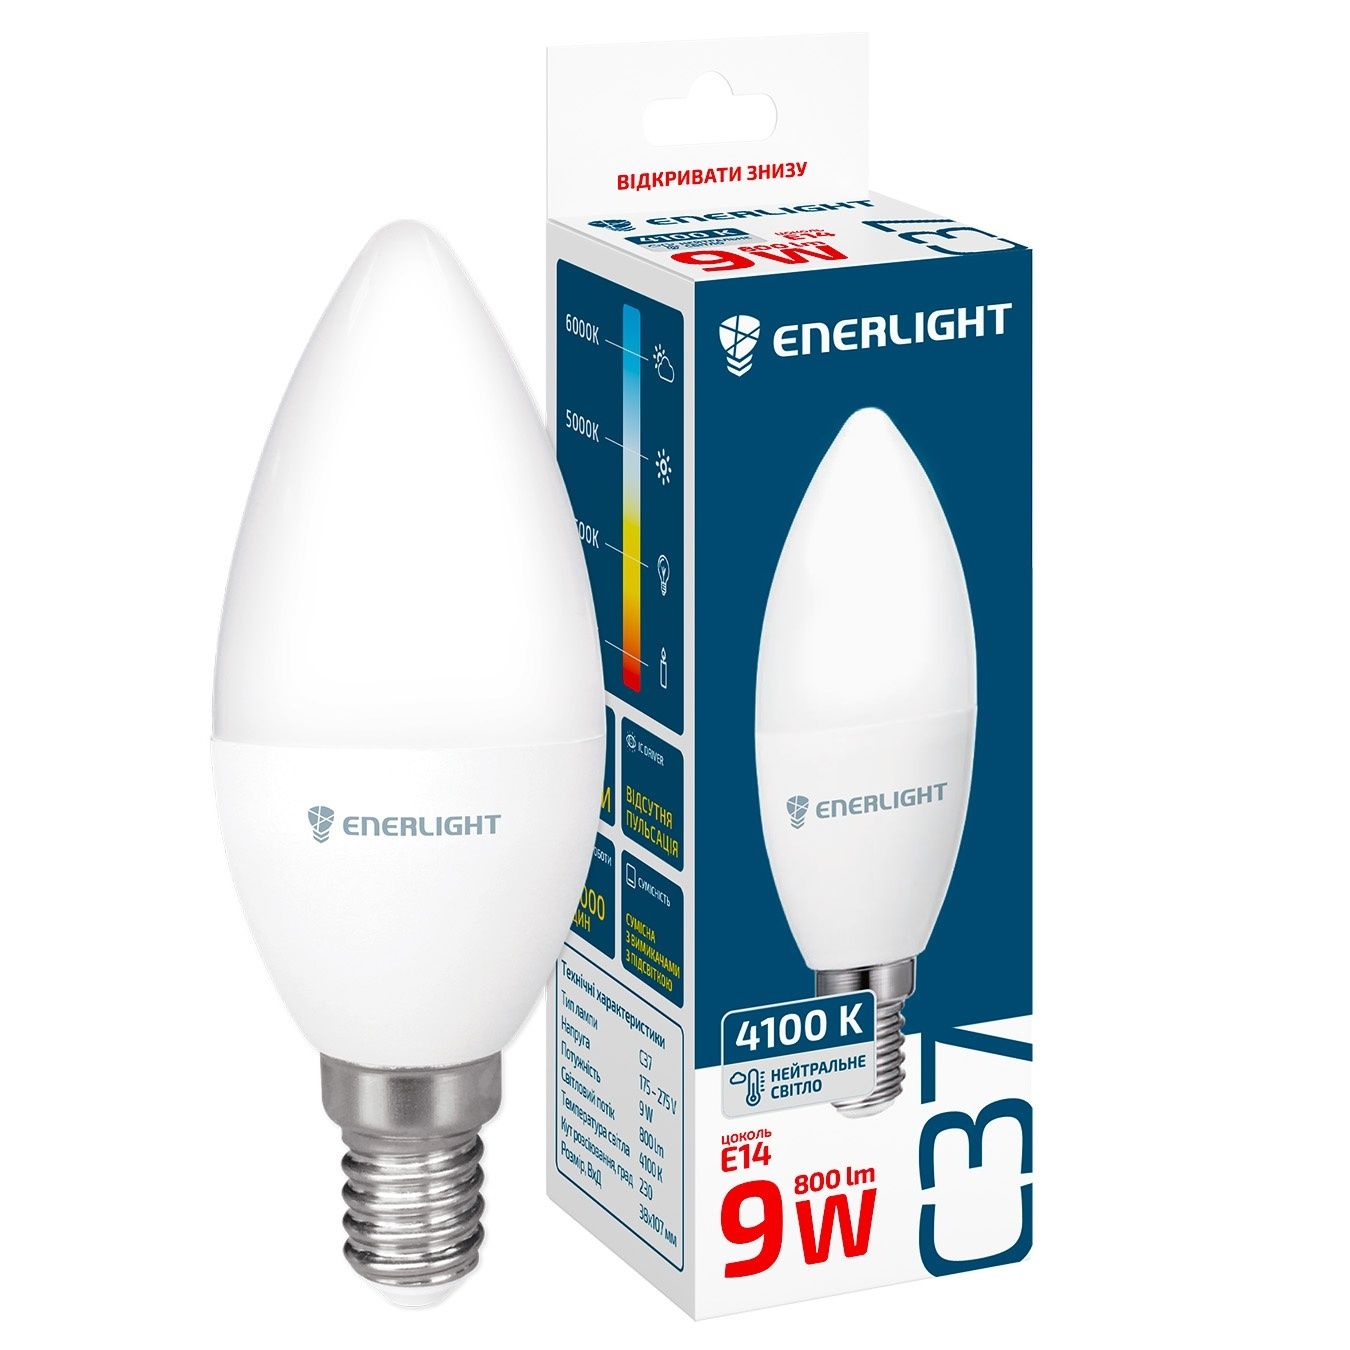 Enerlight LED Lamp C37 9W E14 4100K